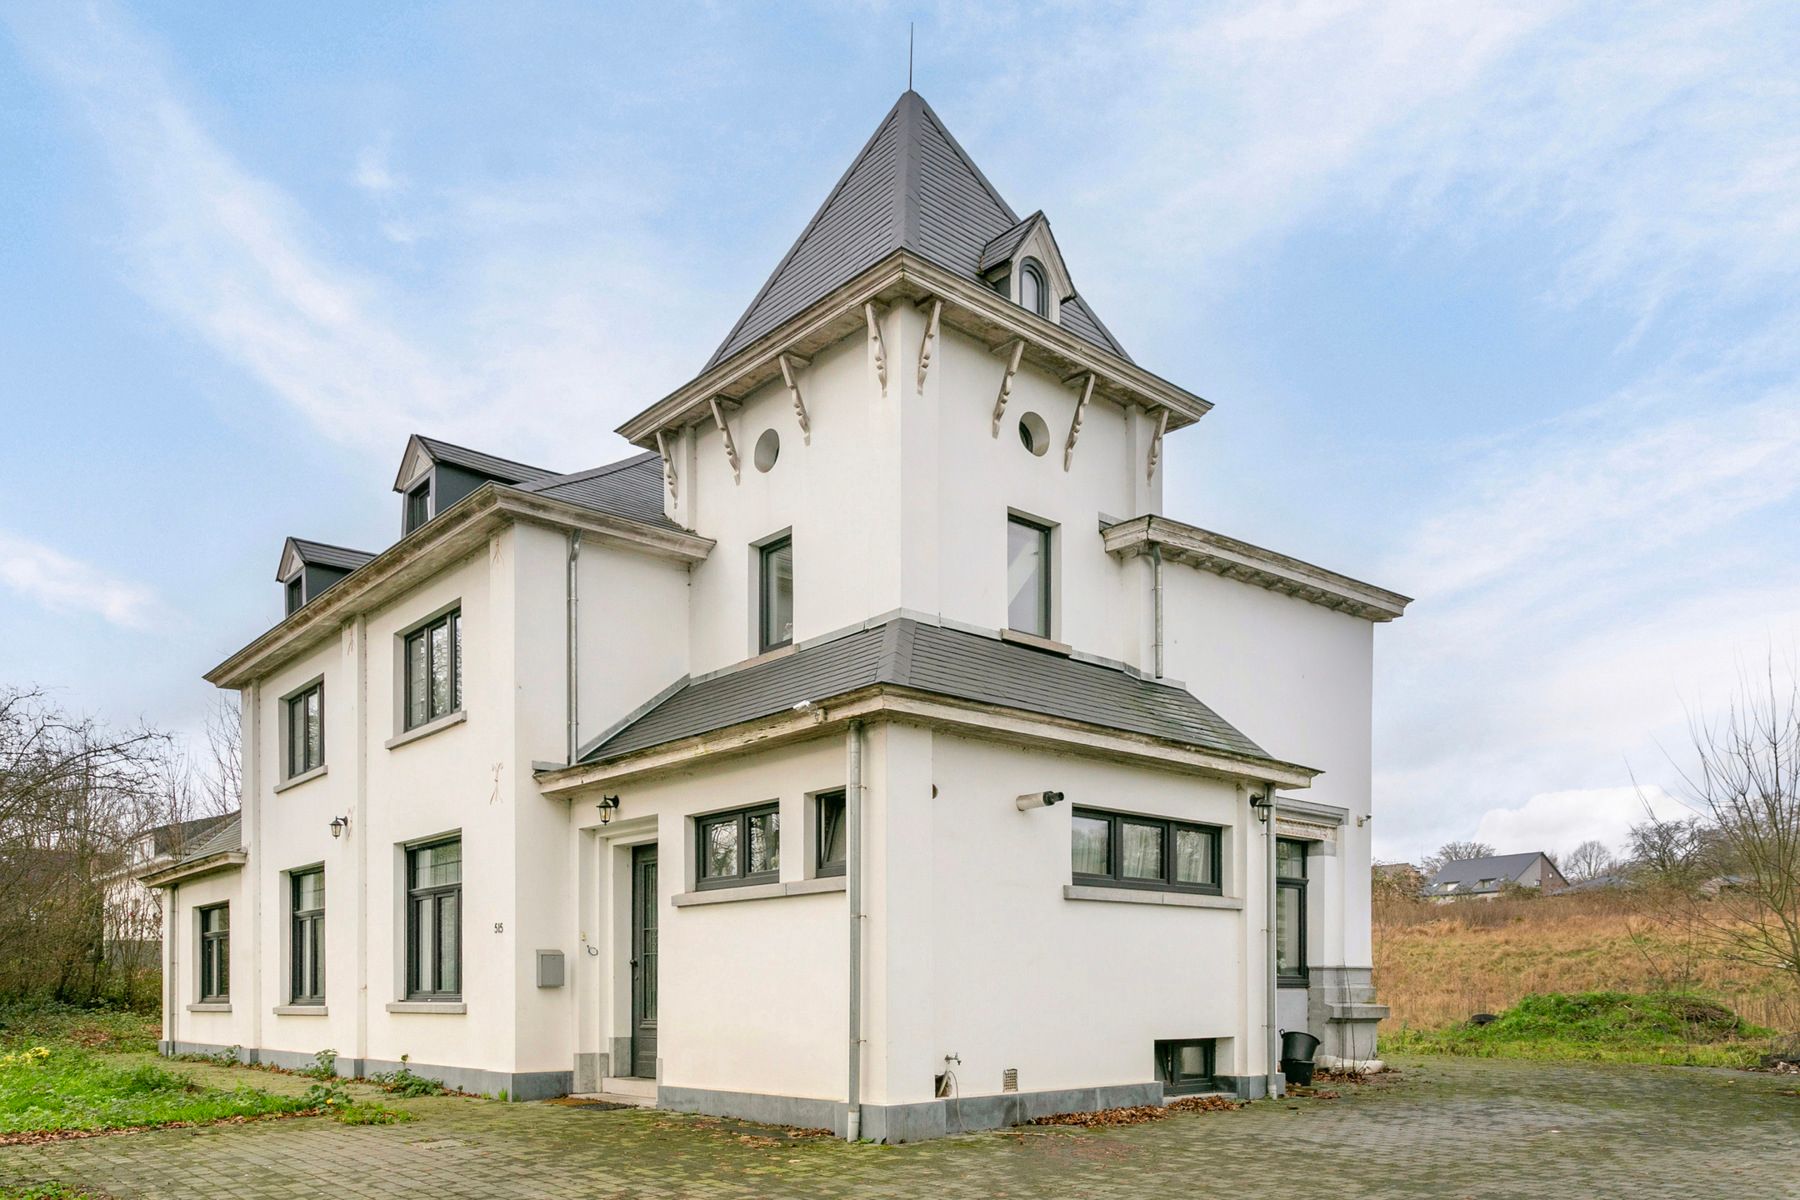 Villa te koop Ninoofsesteenweg 515 - 1701 Dilbeek